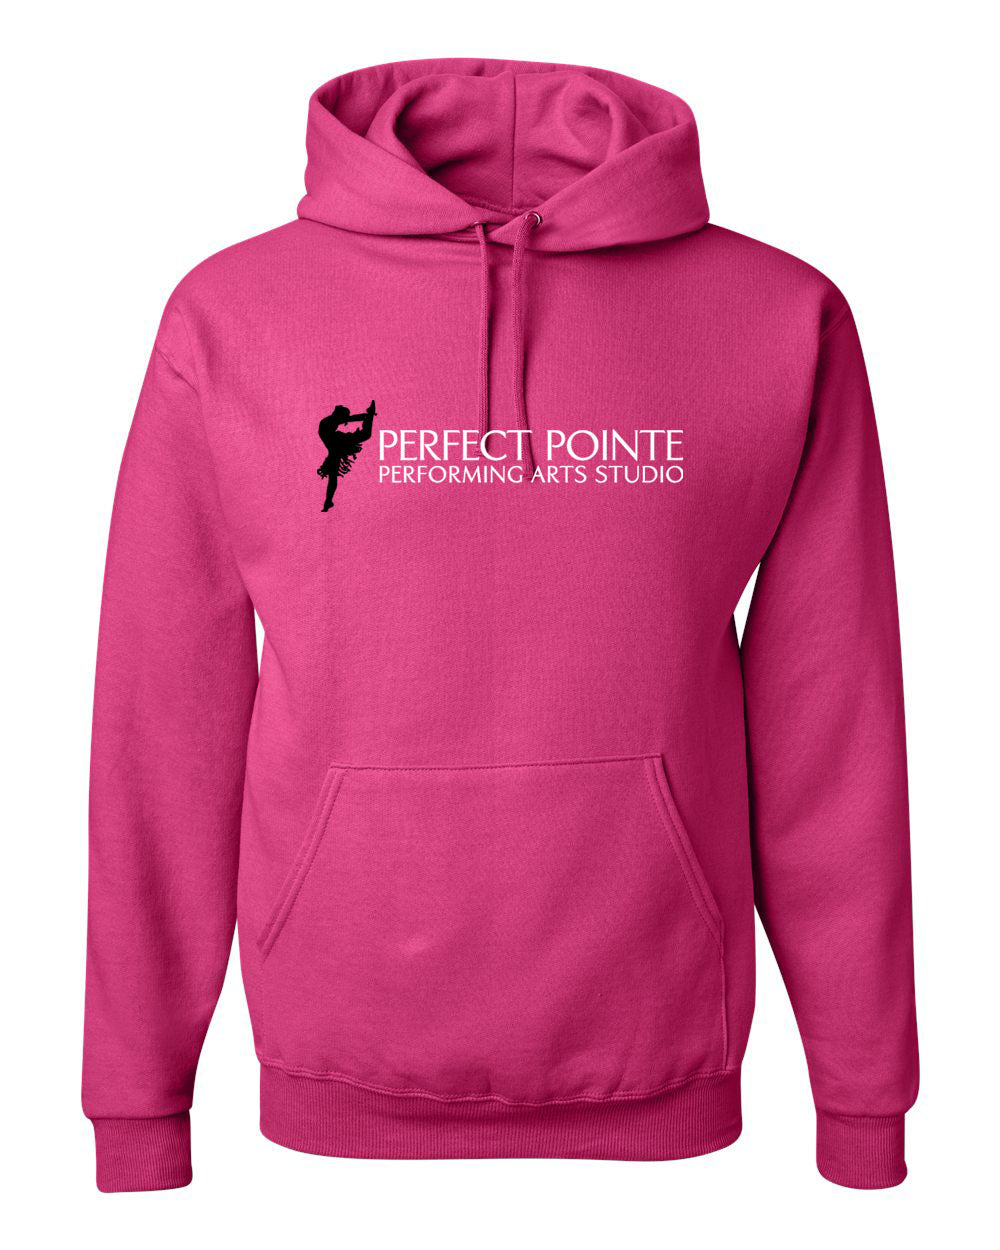 Perfect Pointe Design 1 Hooded Sweatshirt, pink